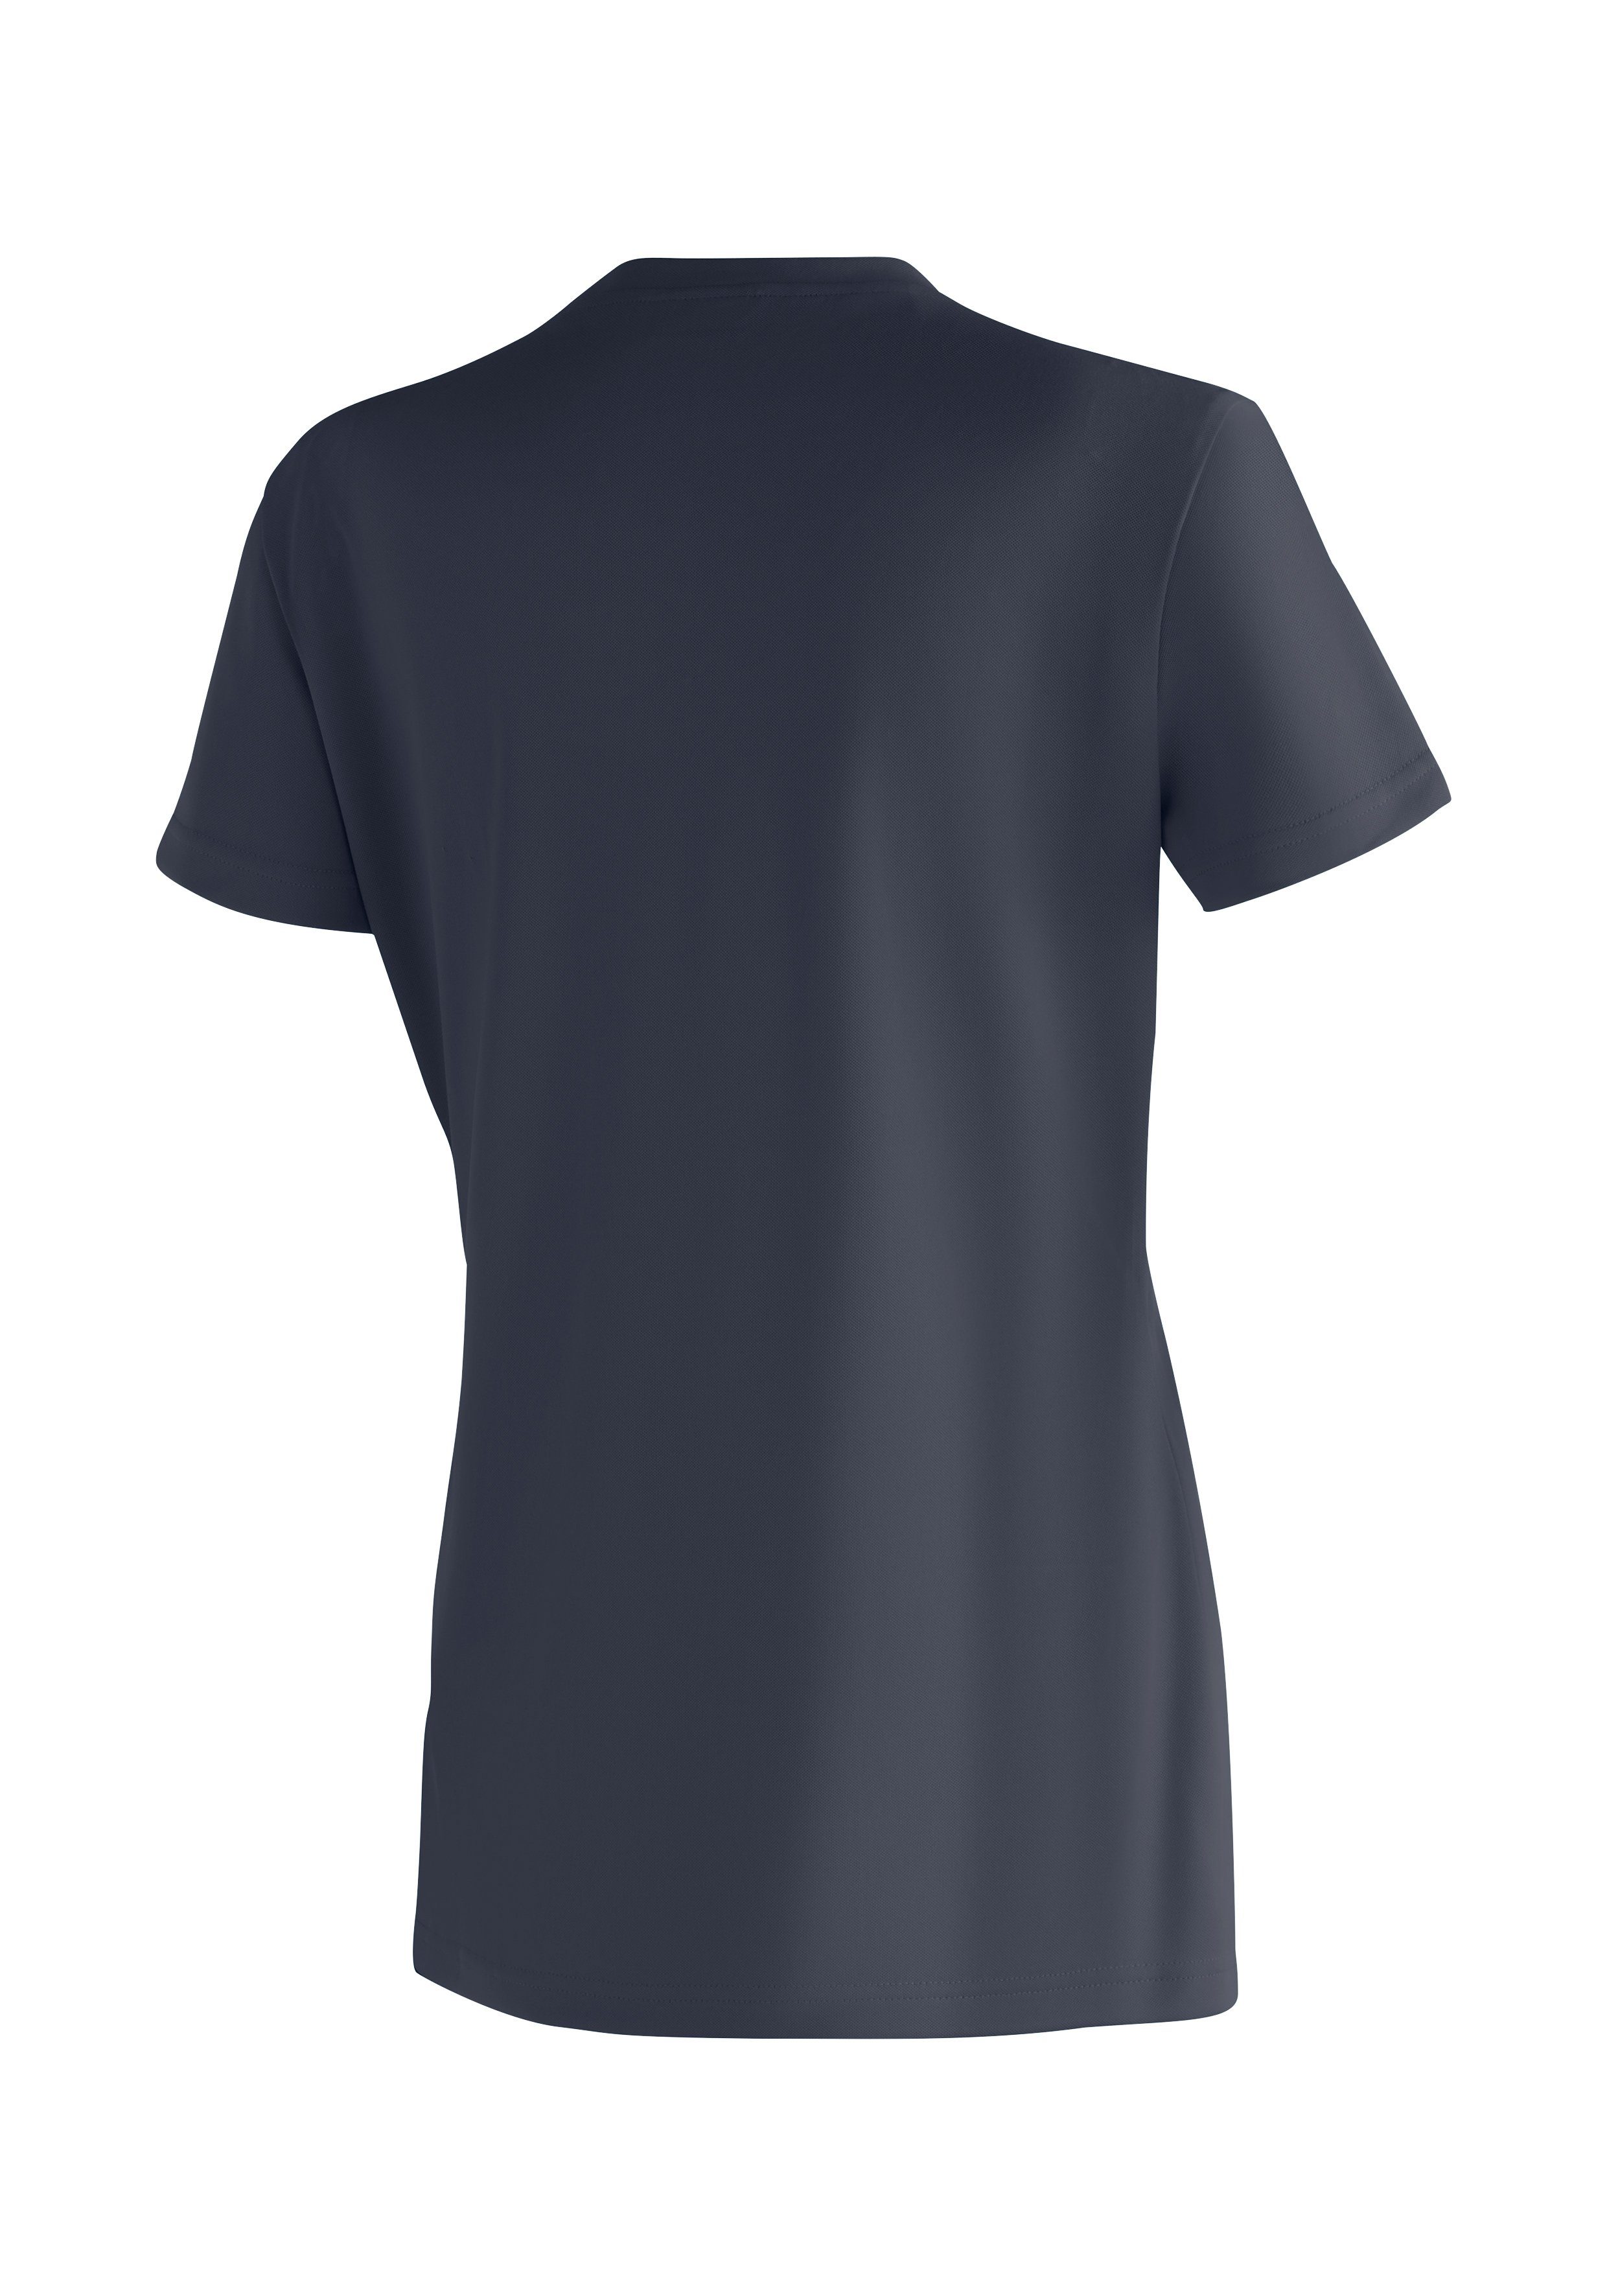 Maier Sports Funktionsshirt Waltraut Print Passformstabilität vielseitiges T-Shirt dunkelblau mit Funktional hoher